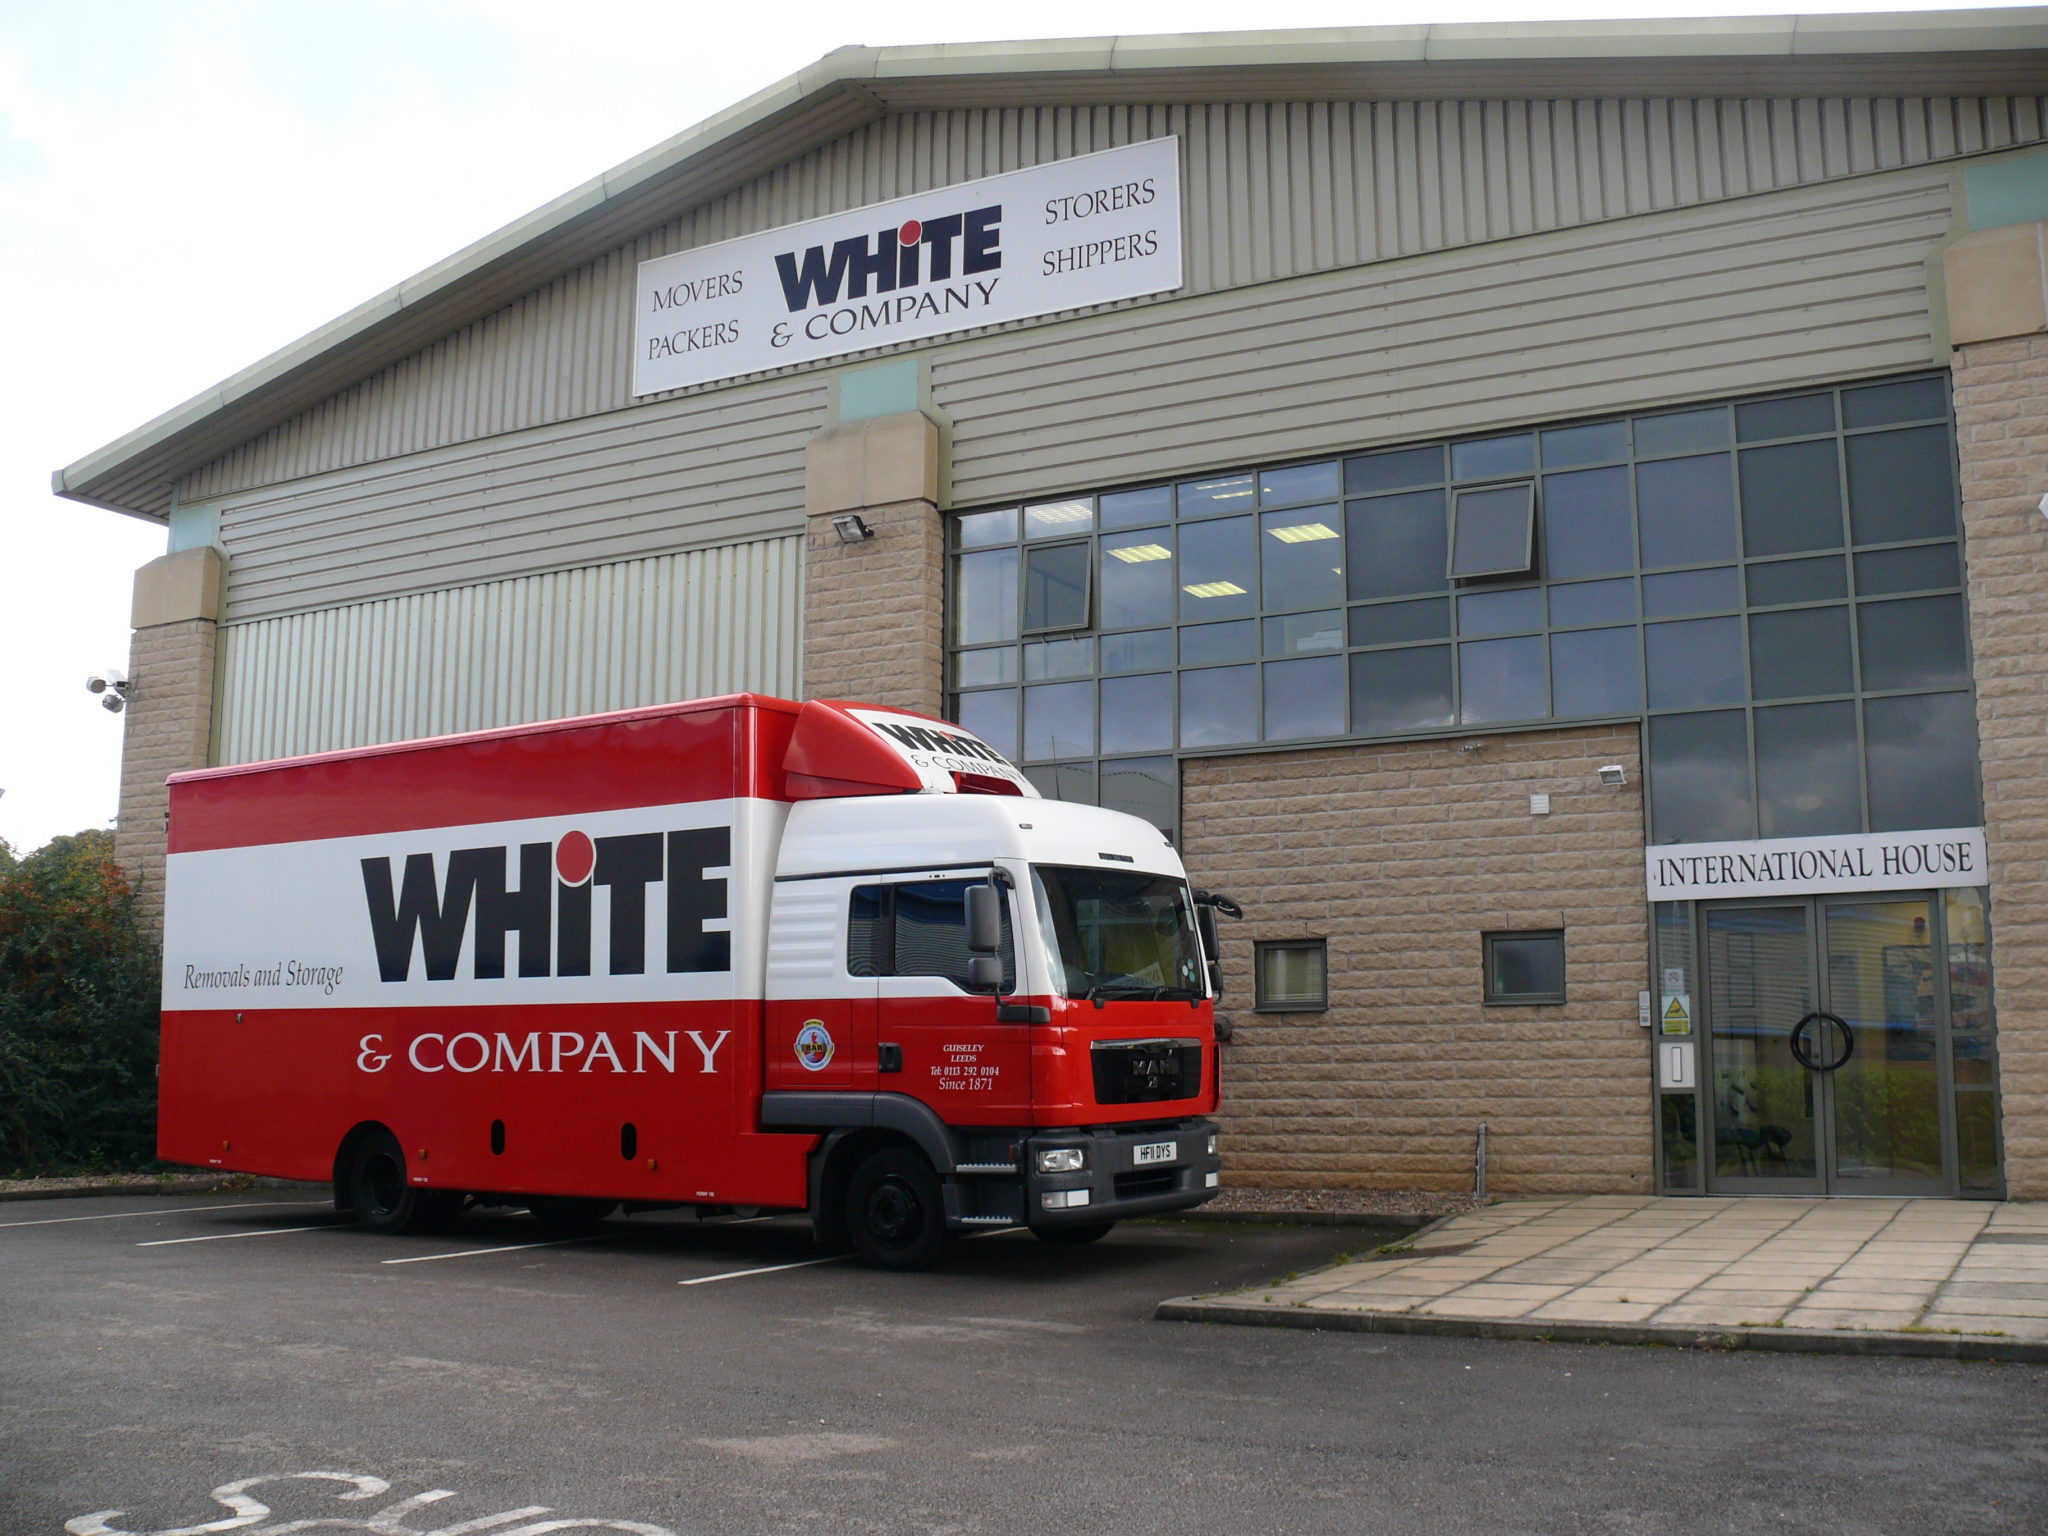 Removal Companies Near Me Southampton: White & Company